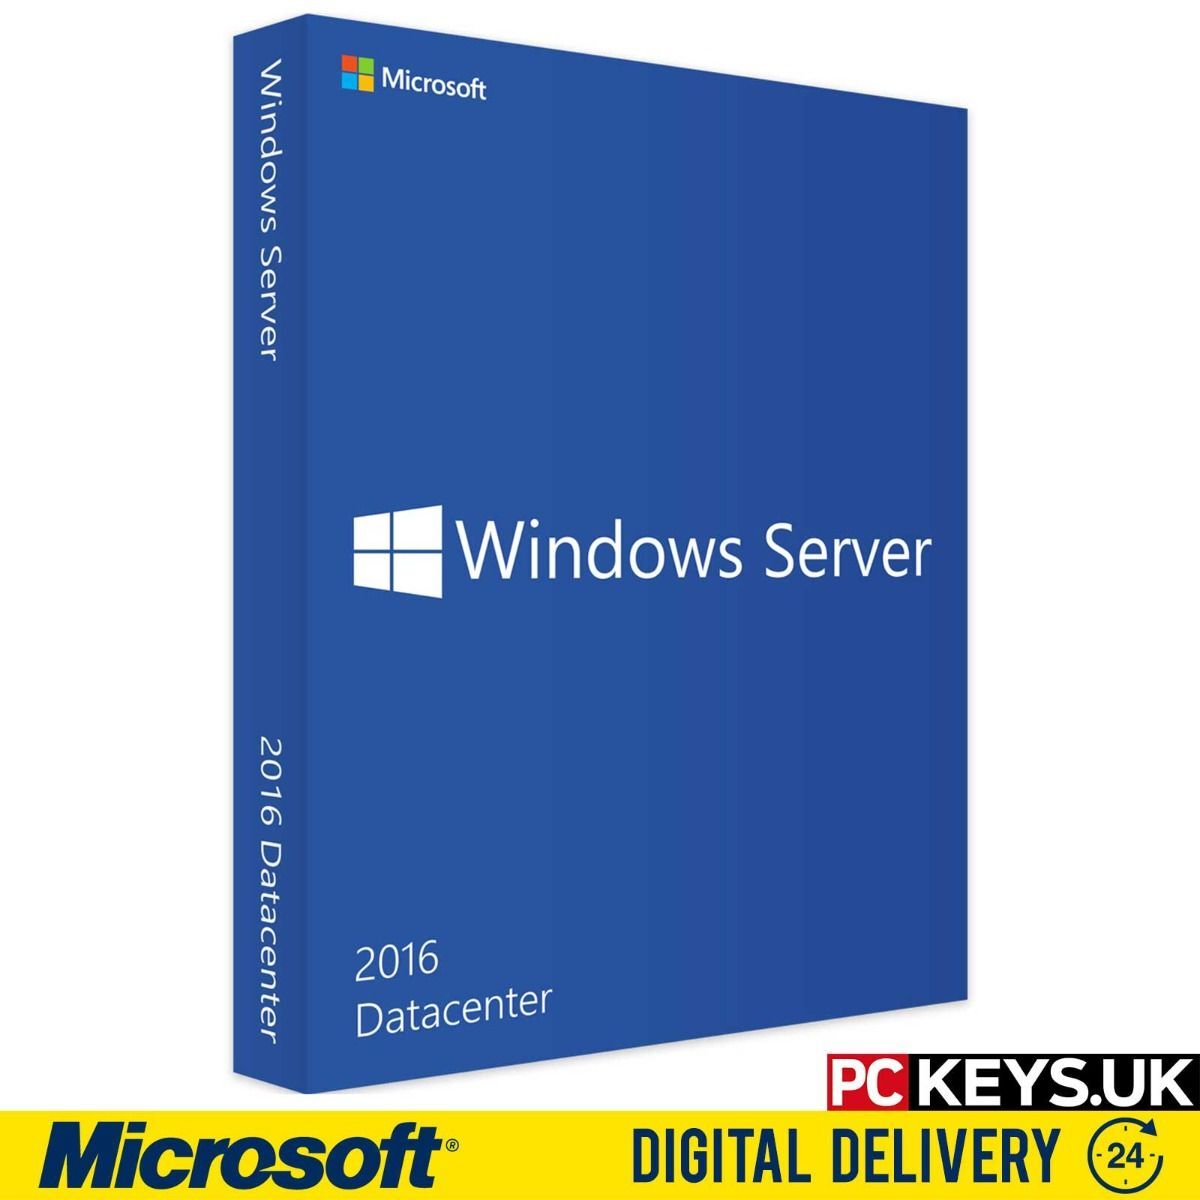 Microsoft Windows Server 2016 Datacenter License